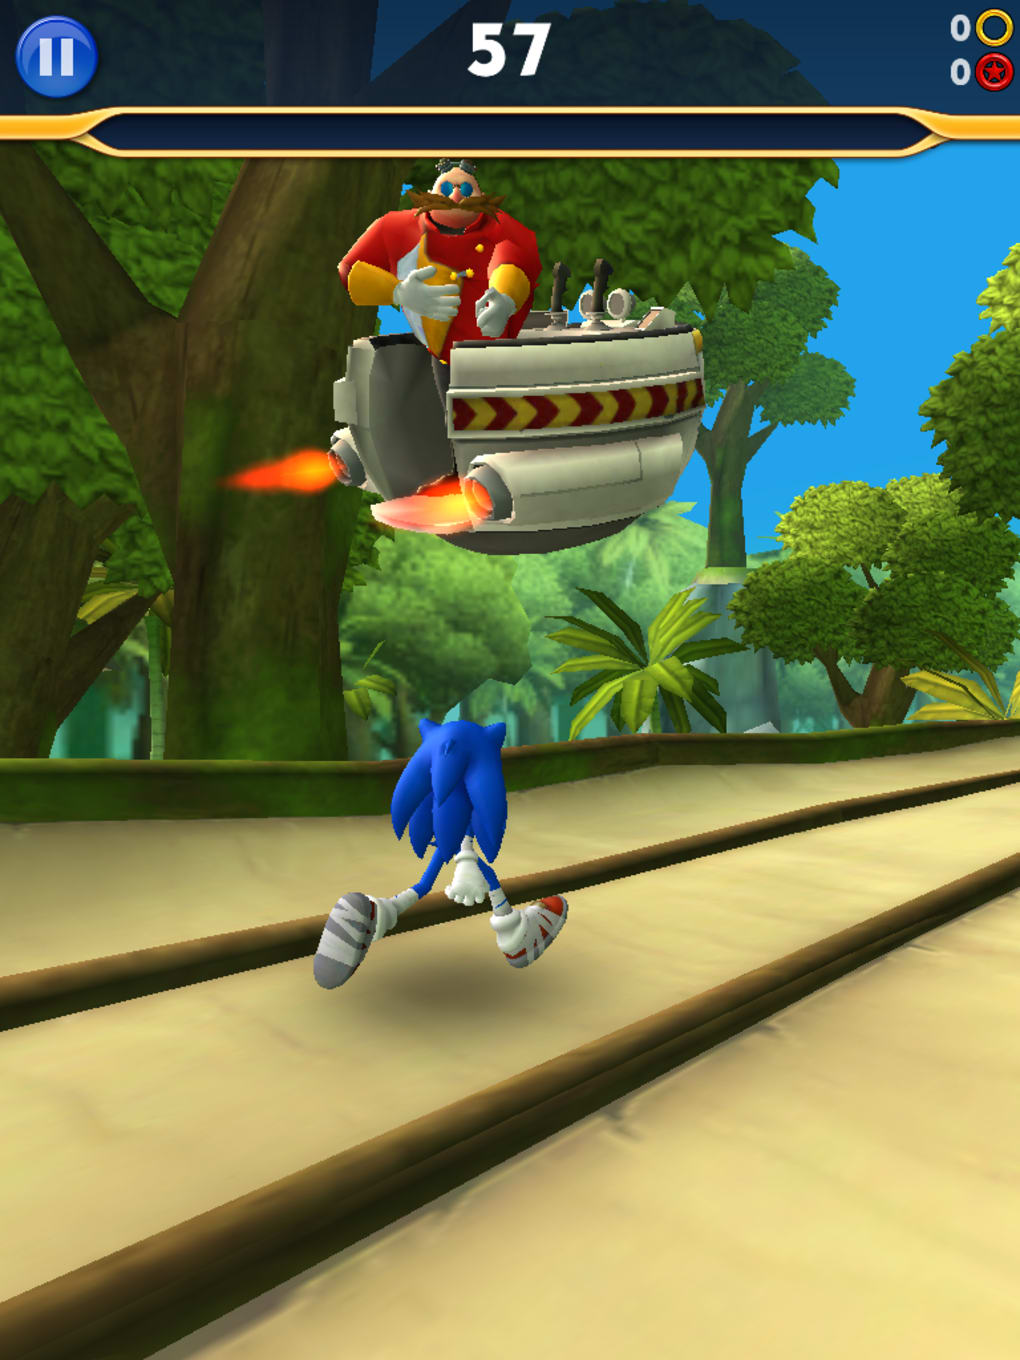 Sonic Boom: Rise Of Lyric Sonic Dash 2: Sonic Boom Sonic The